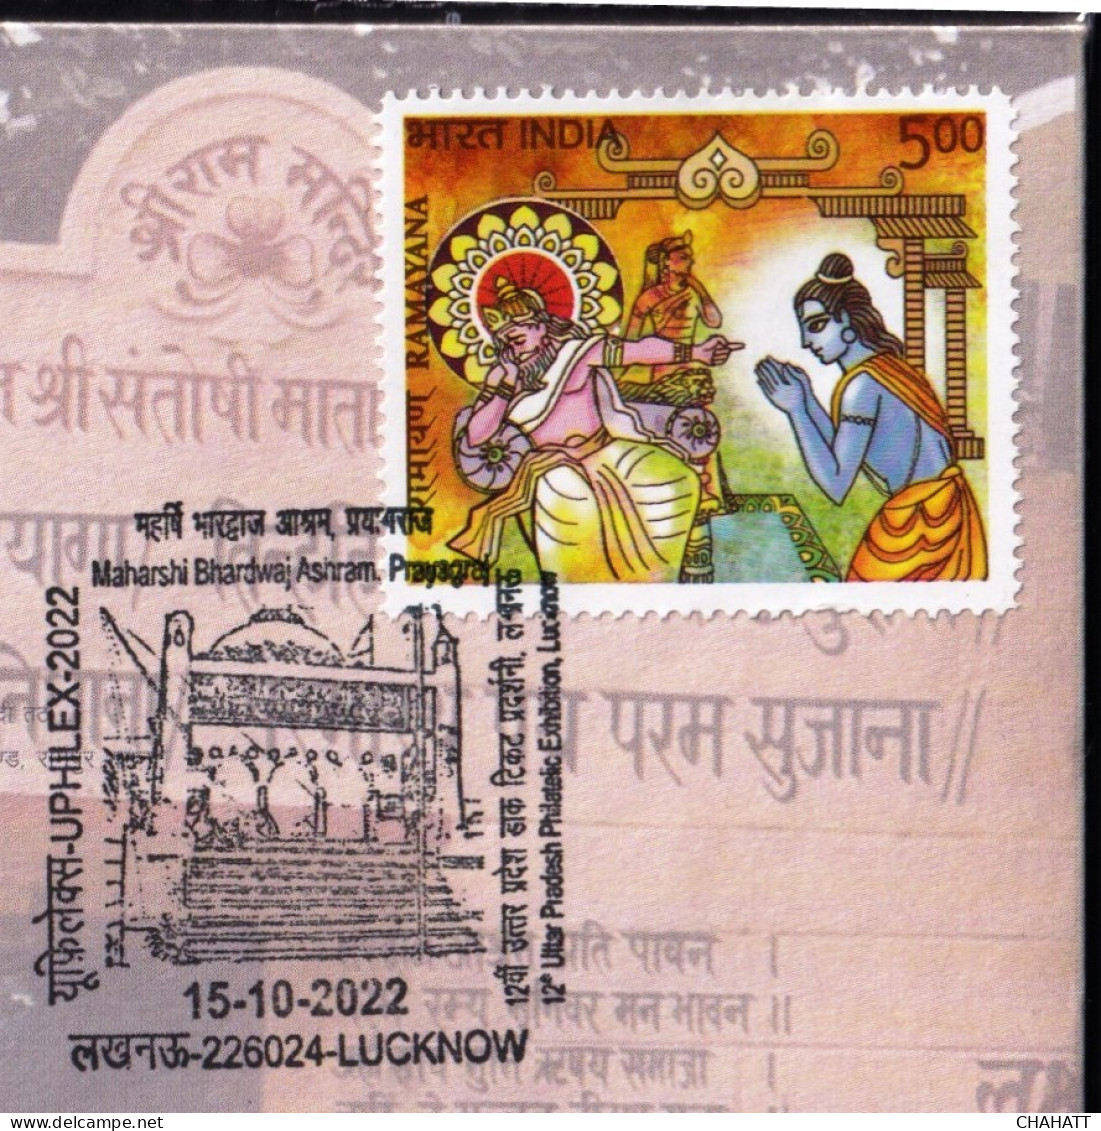 HINDUISM - RAMAYAN- MAHARSHI BHARDWAJ ASHRAM, PRAYAGRAJ - PICTORIAL CANCELLATION - SPECIAL COVER - INDIA -2022- BX4-23 - Hinduism